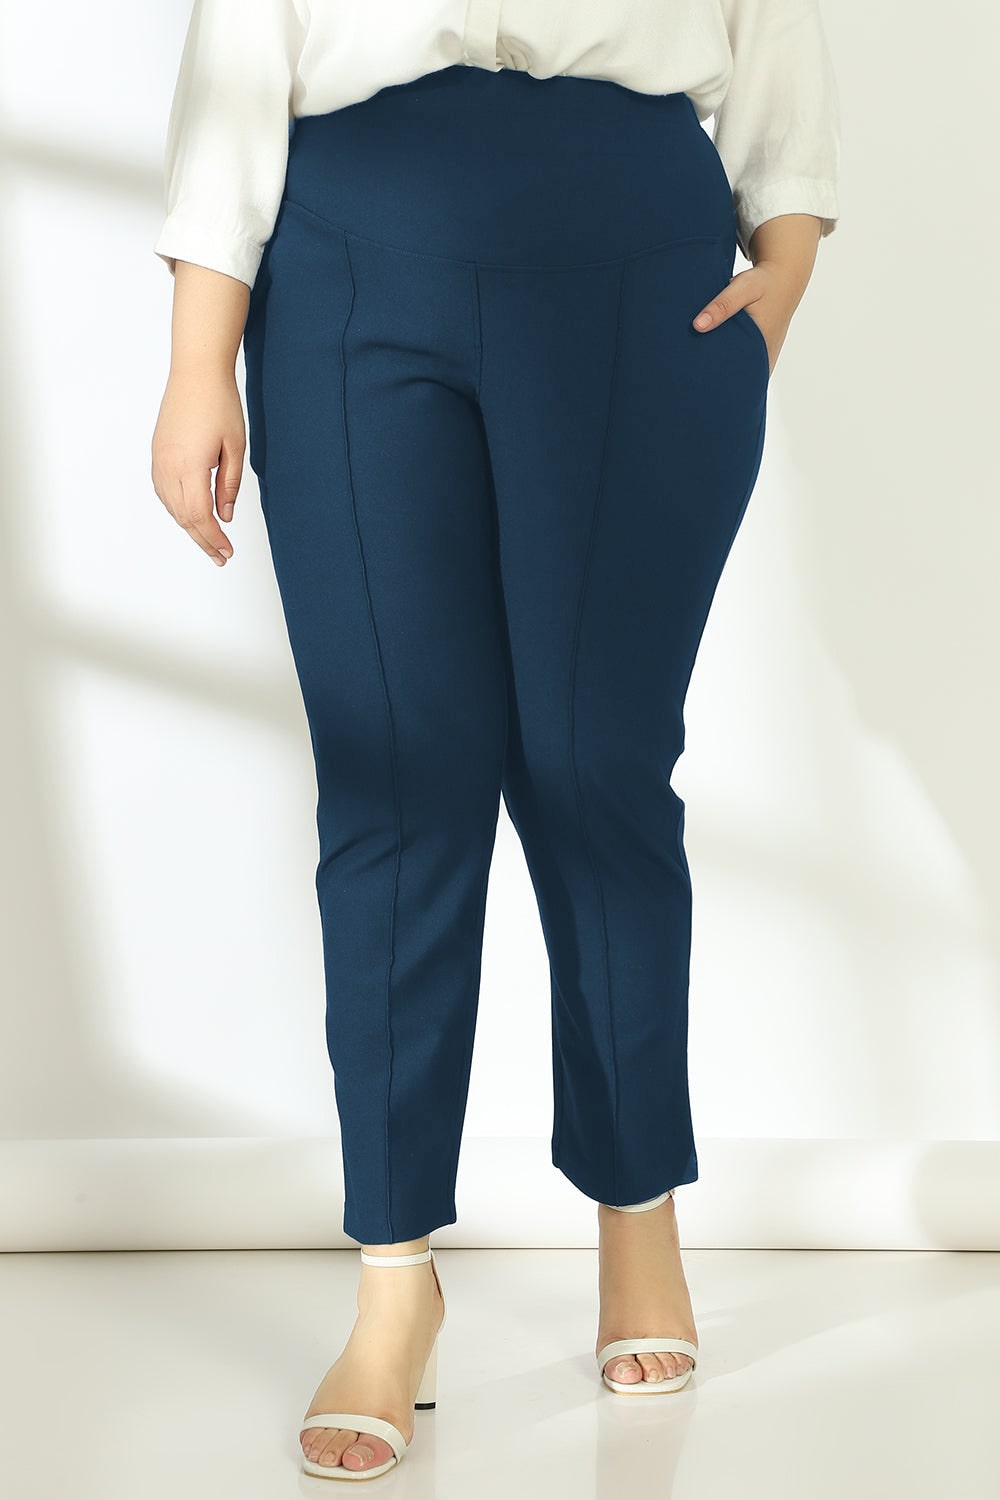 AMYDUS Plus Size Women Pajama/Lounge Pants | Soft Fabric | 2 Side Pockets |  Lowers for Women - XL to 9XL